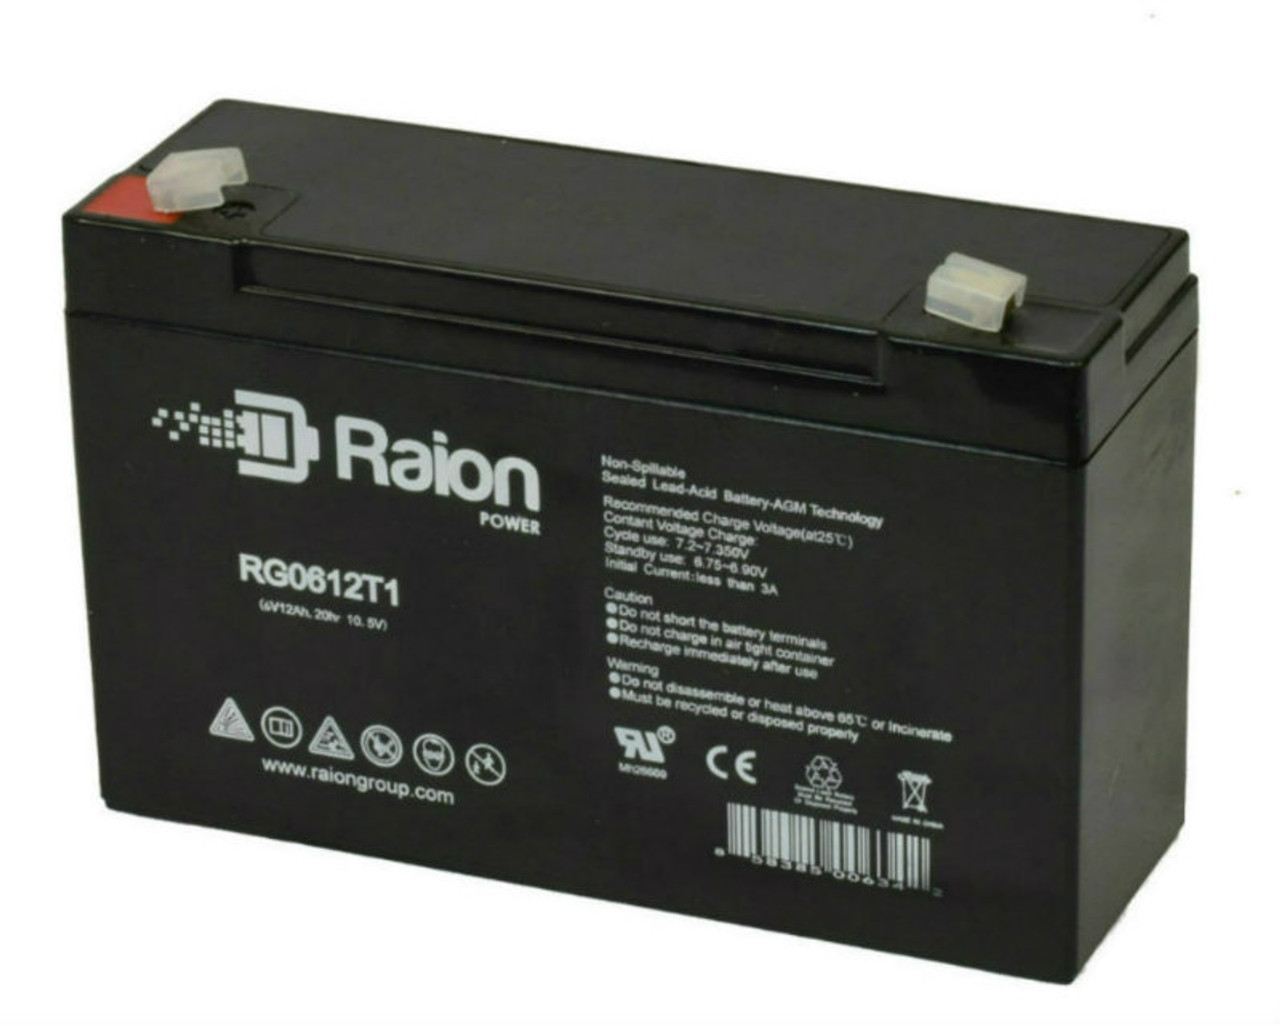 Raion Power RG06120T1 Replacement 6V 12Ah Emergency Light Battery for Sonnenschein 95523